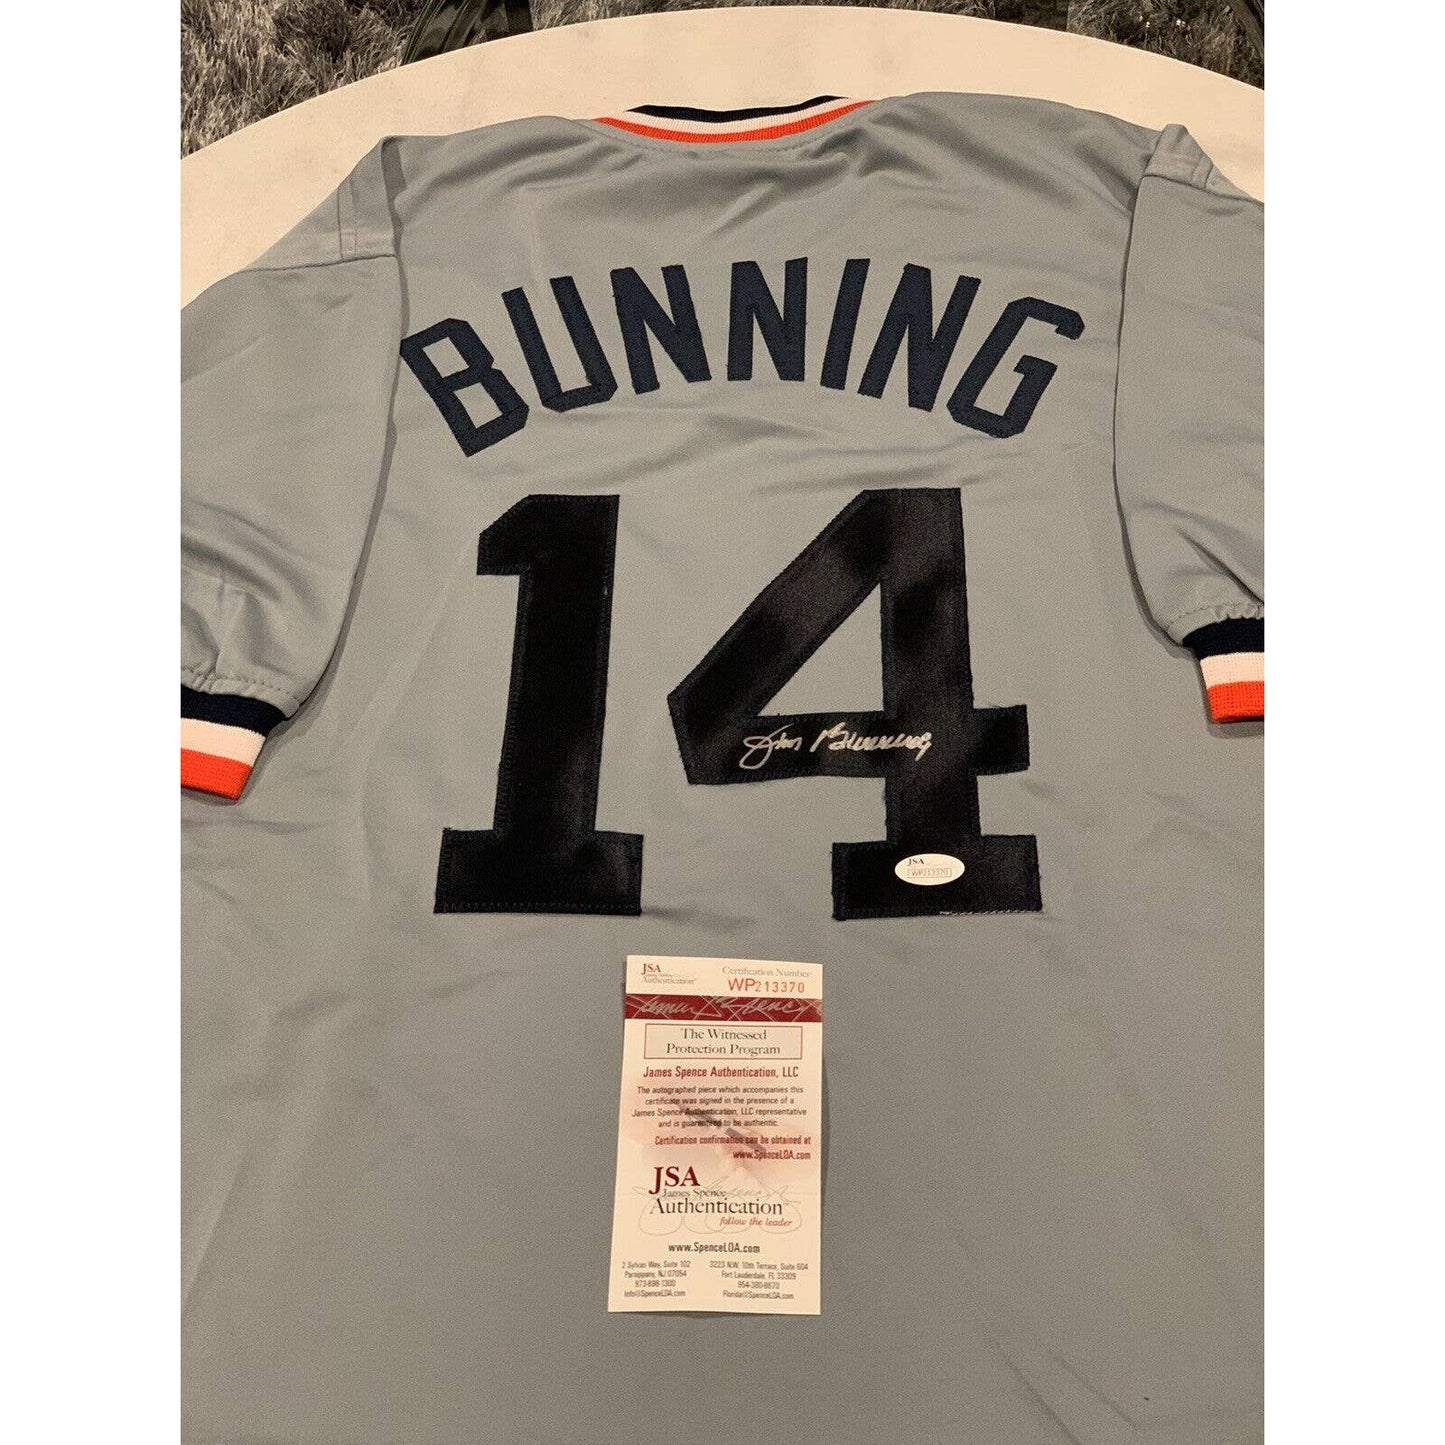 Jim Bunning Autographed/Signed Jersey JSA COA Detroit Tigers - TreasuresEvolved